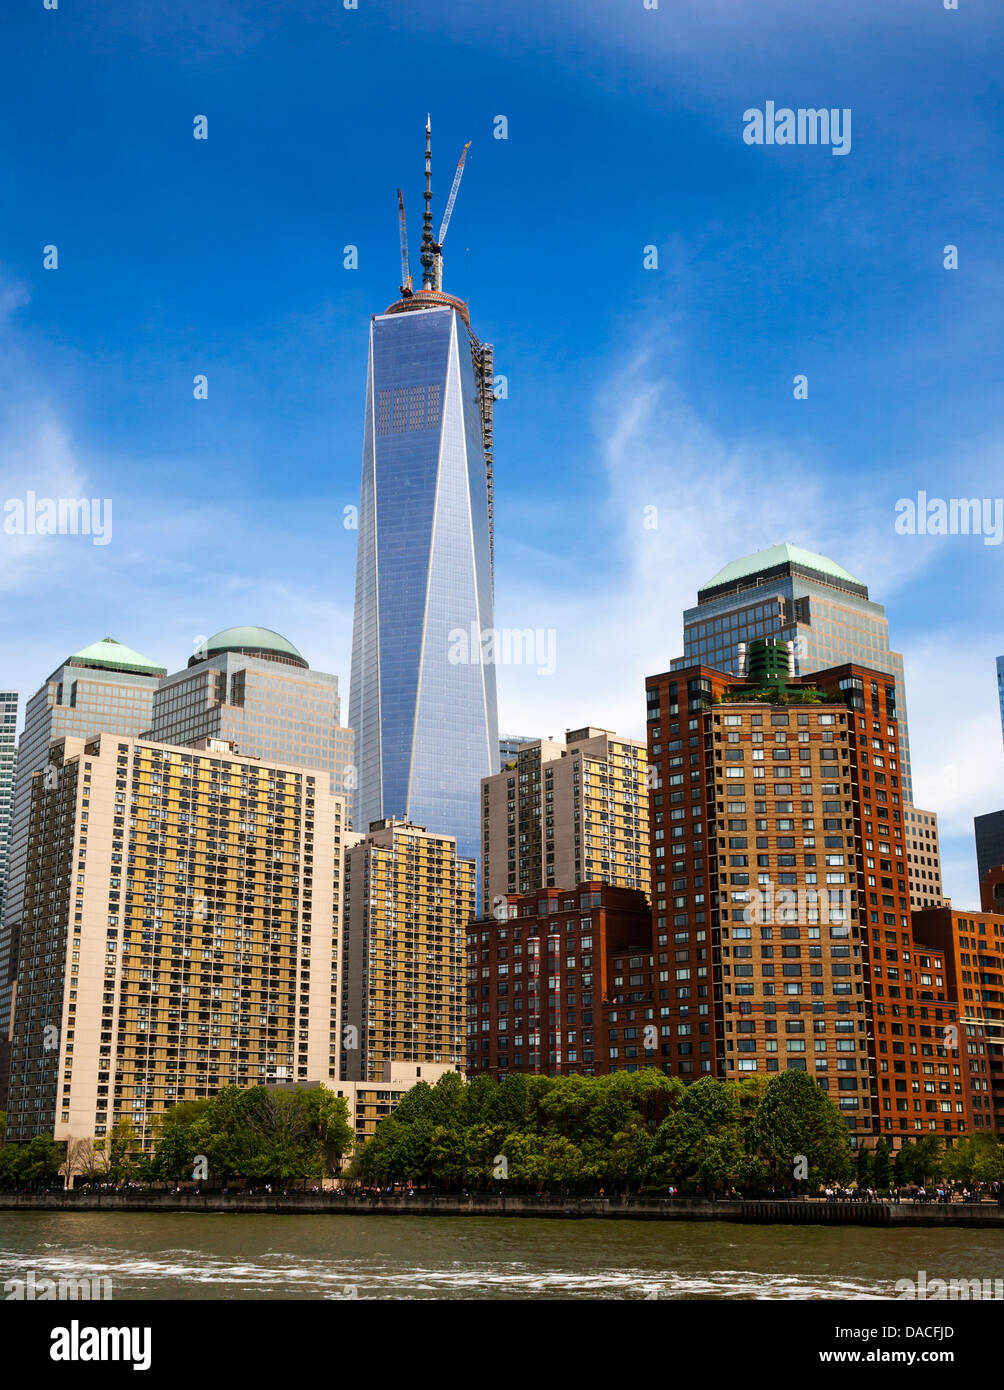 Le Quartier Financier de Manhattan skyline y compris le One World Trade Center, NEW YORK, USA. Banque D'Images